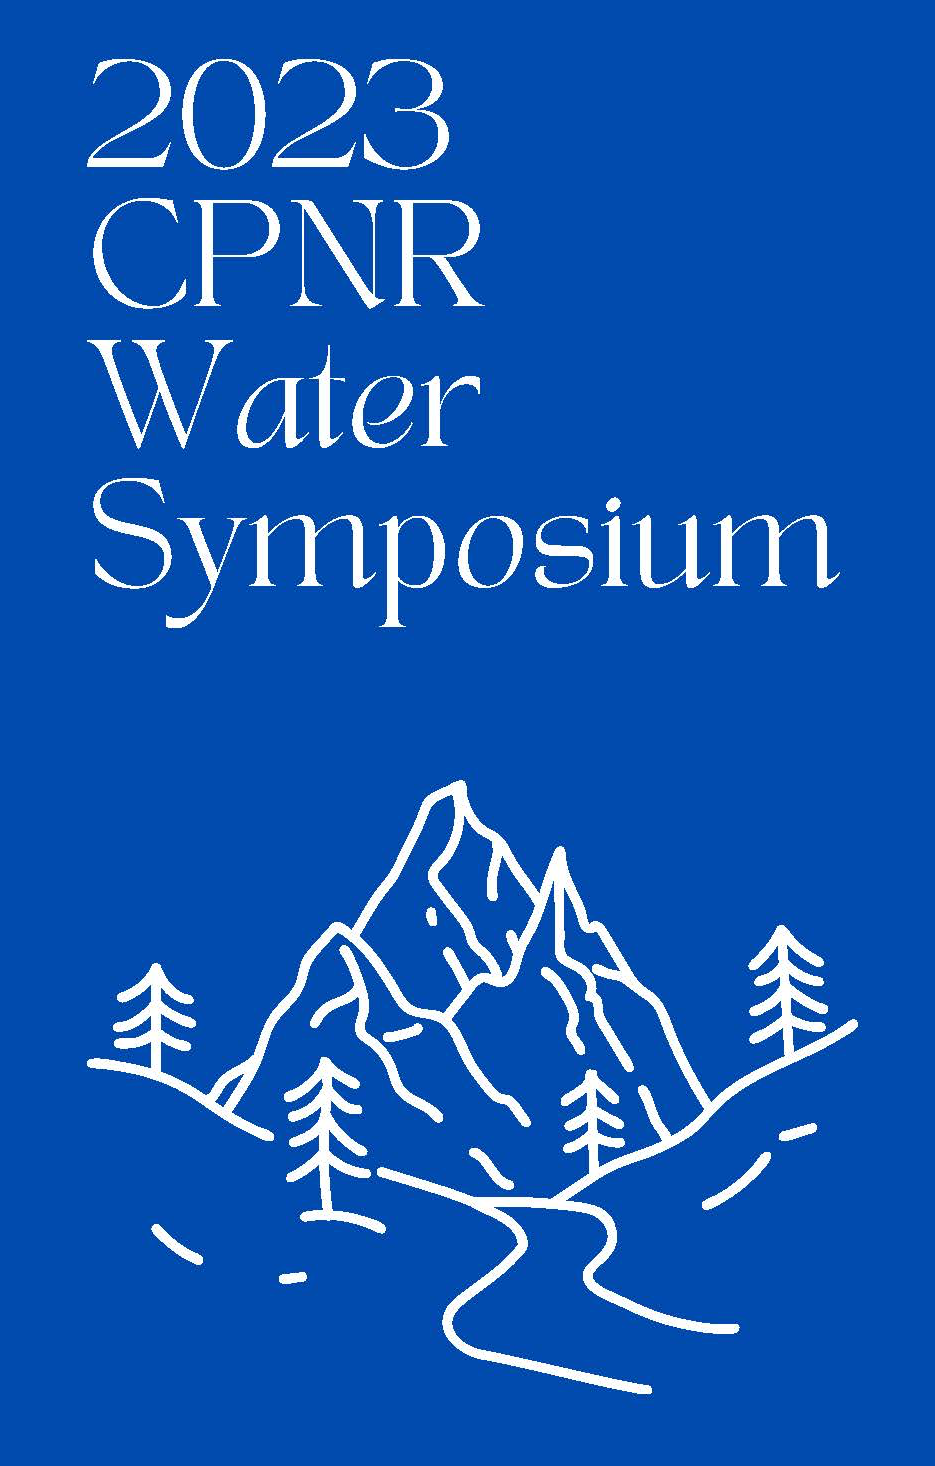 Flier with words "2023 CPNR Water Symposium"